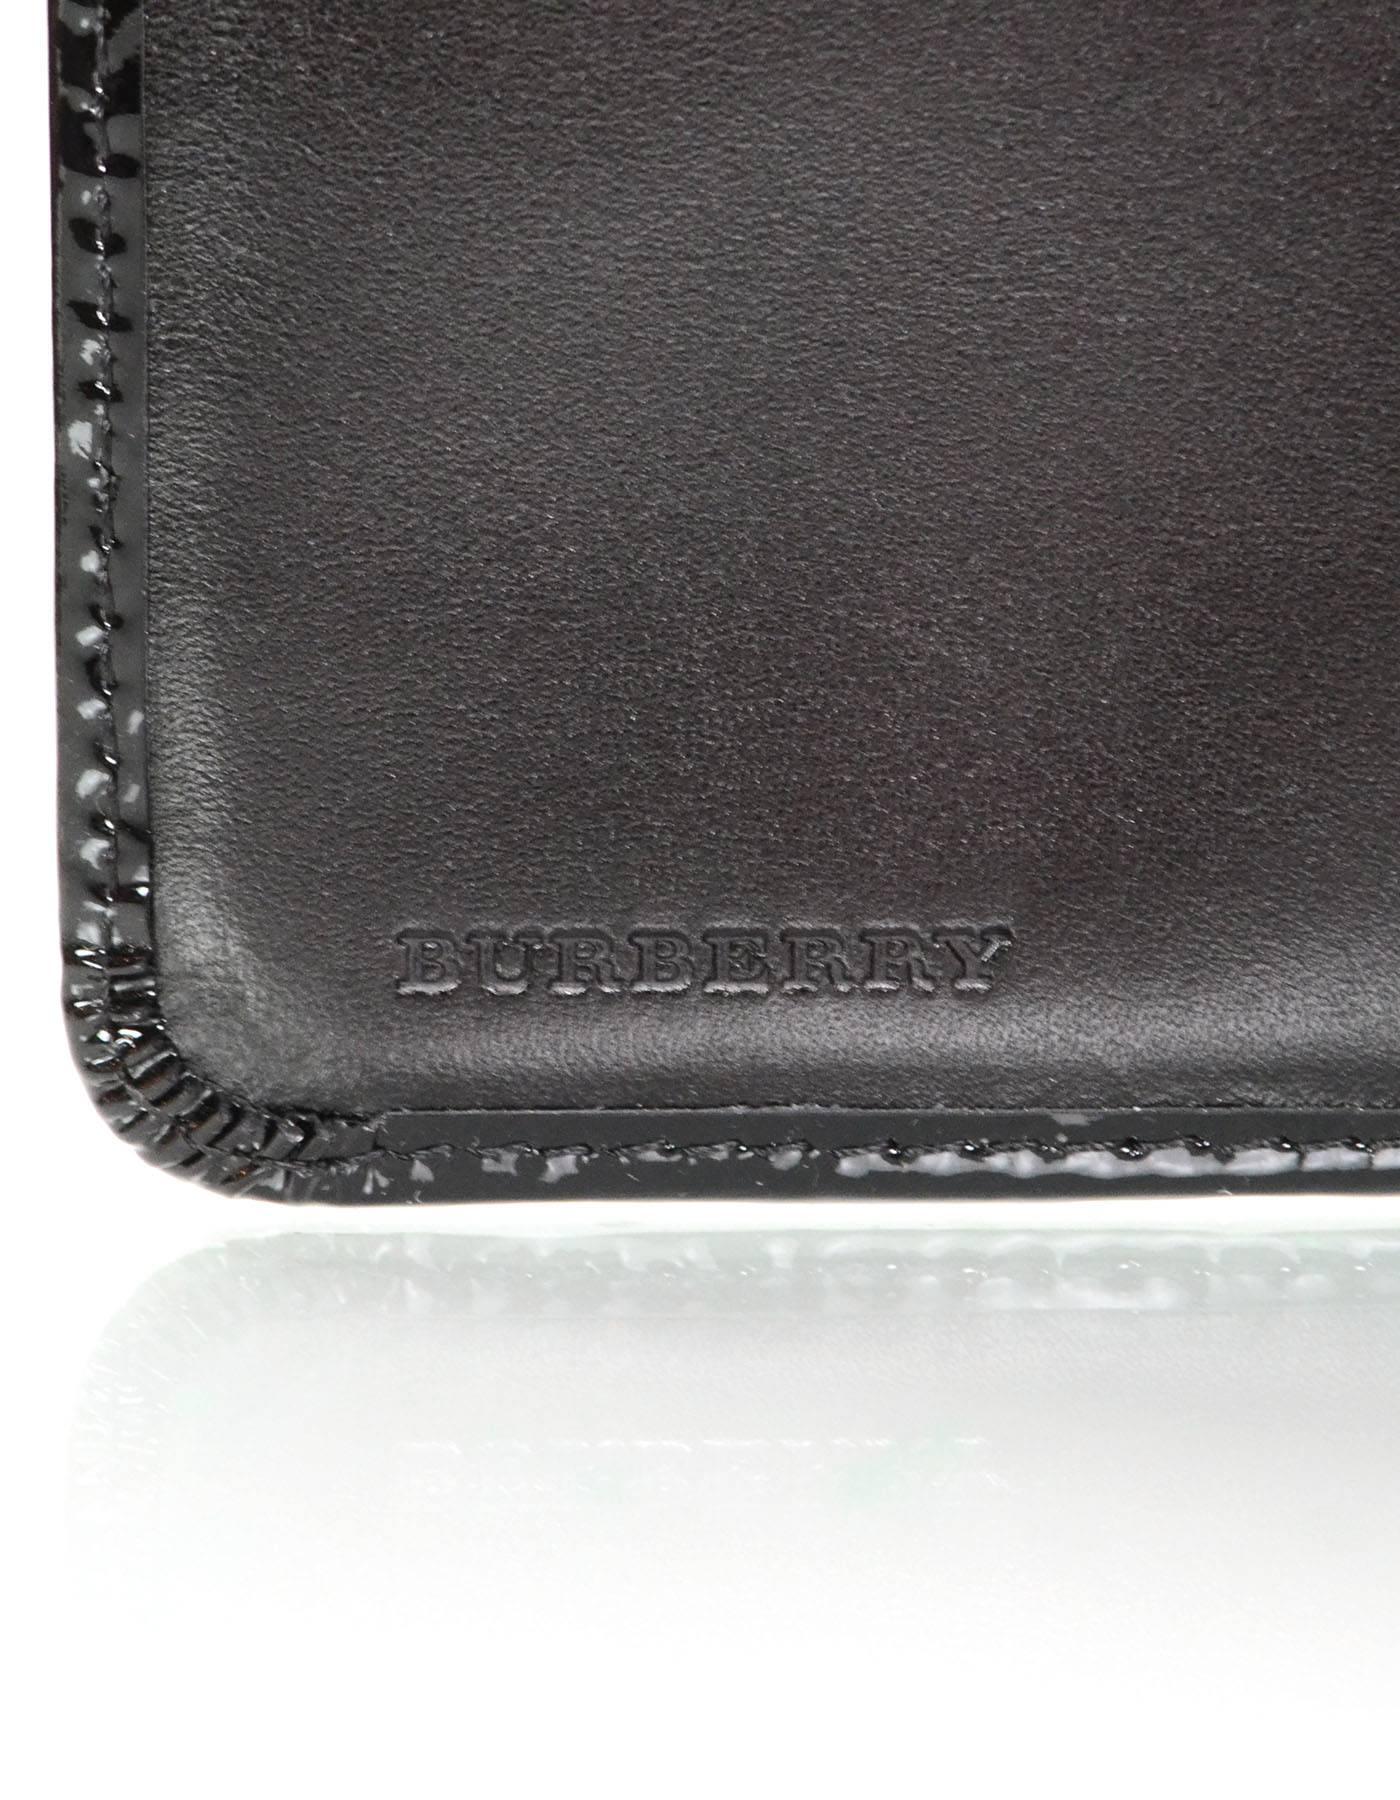 Burberry Black Patent Leather and Nova Plaid Wallet 3